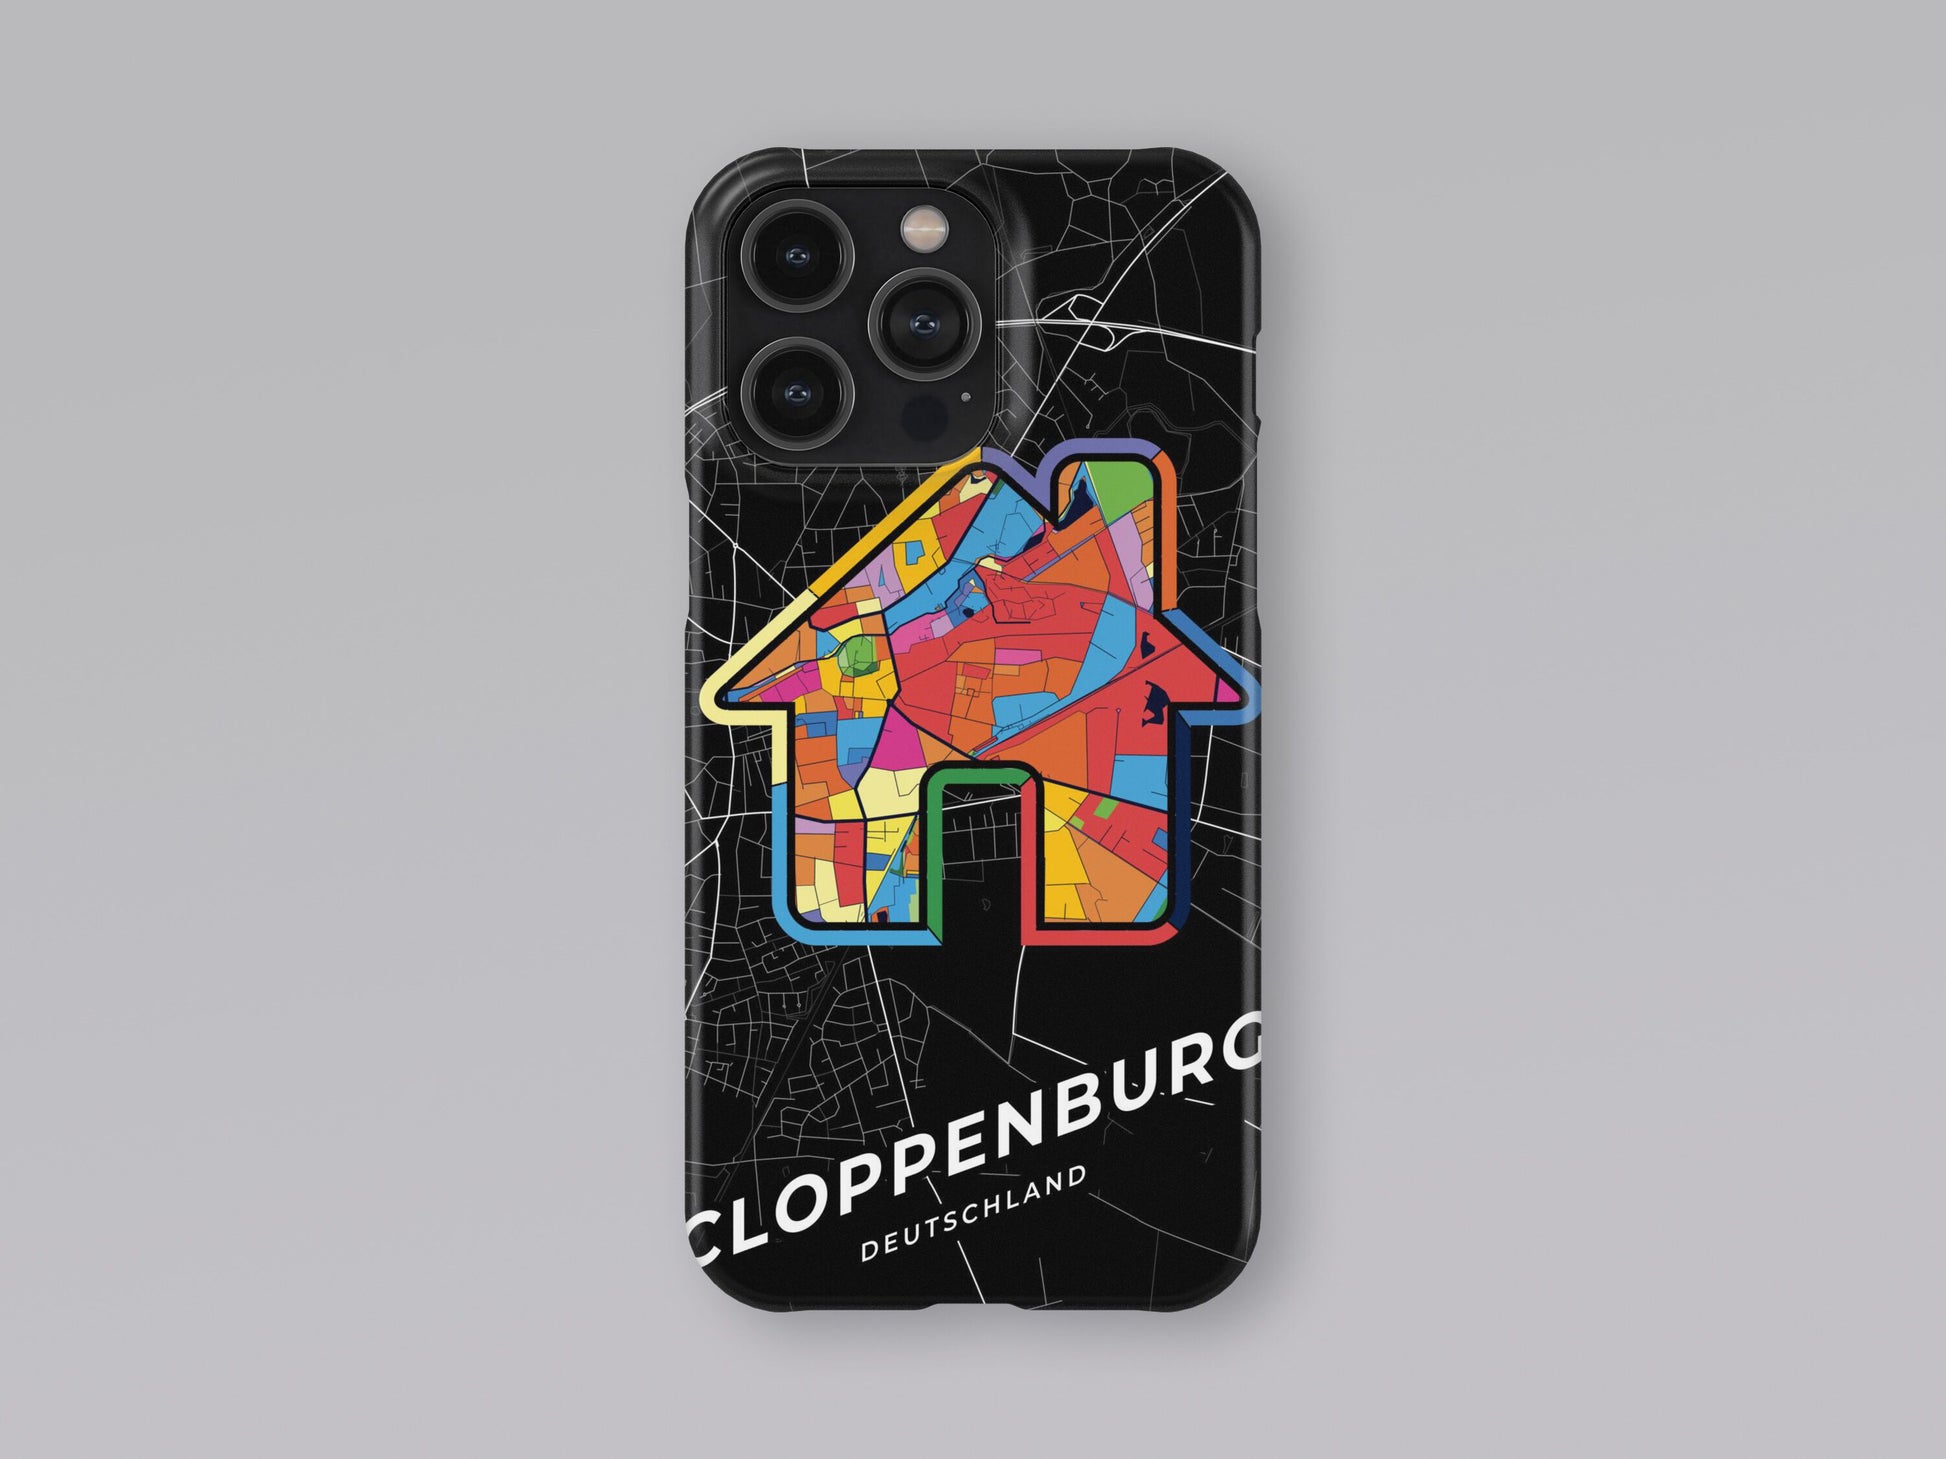 Cloppenburg Deutschland slim phone case with colorful icon. Birthday, wedding or housewarming gift. Couple match cases. 3